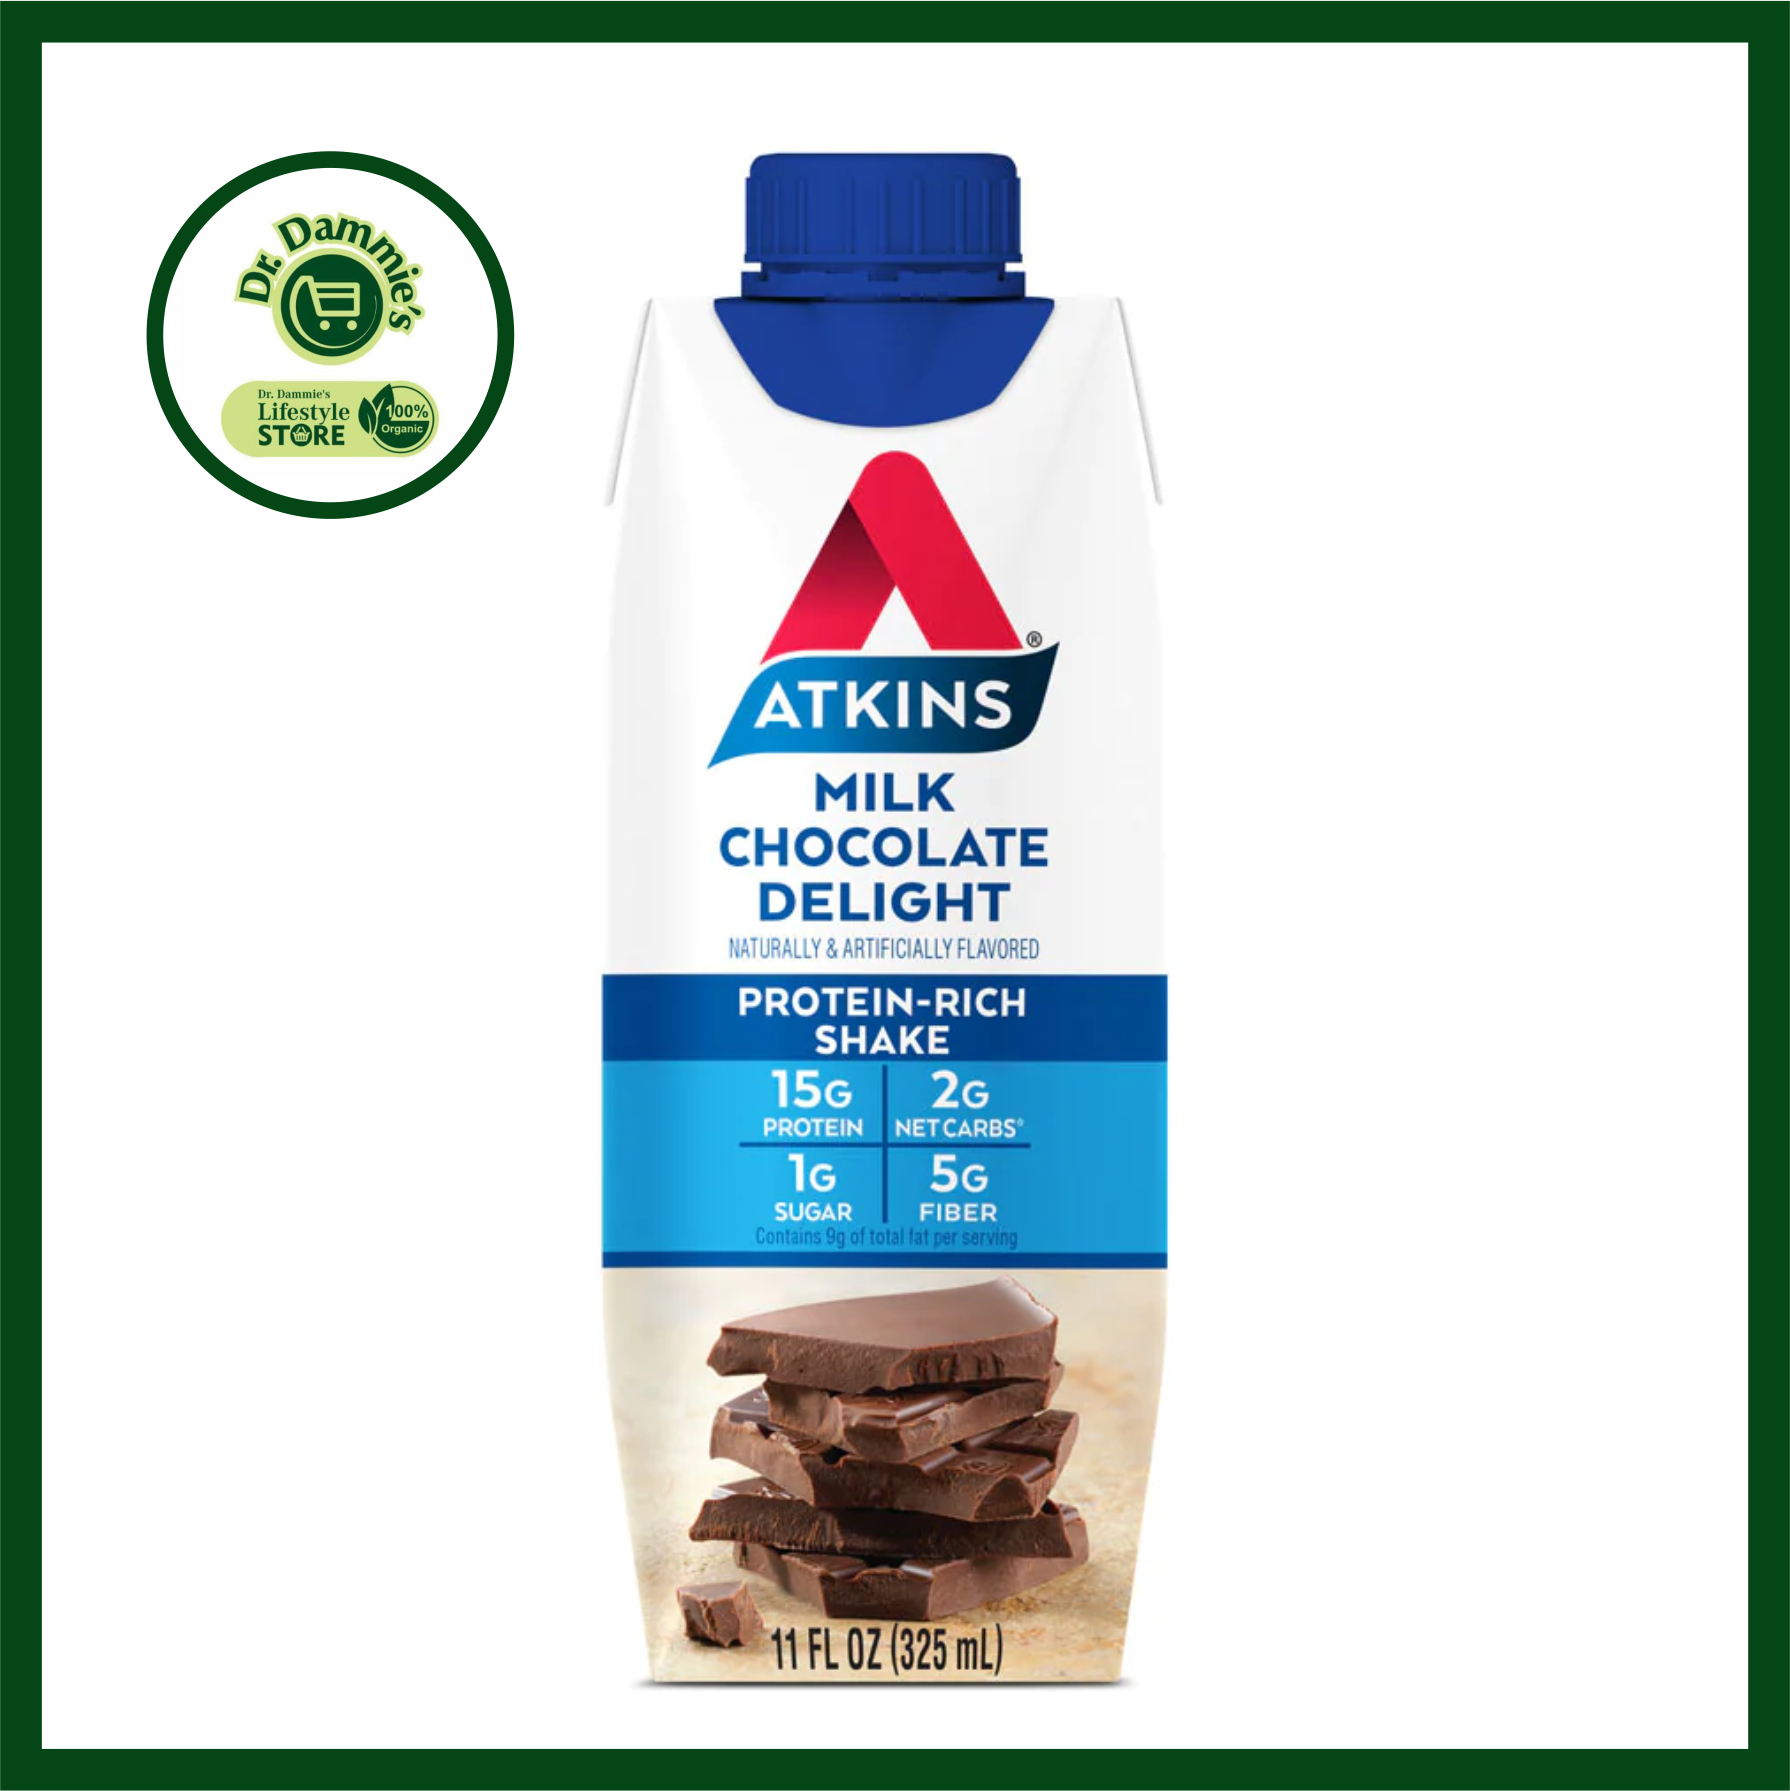 Atkins milk chocolate